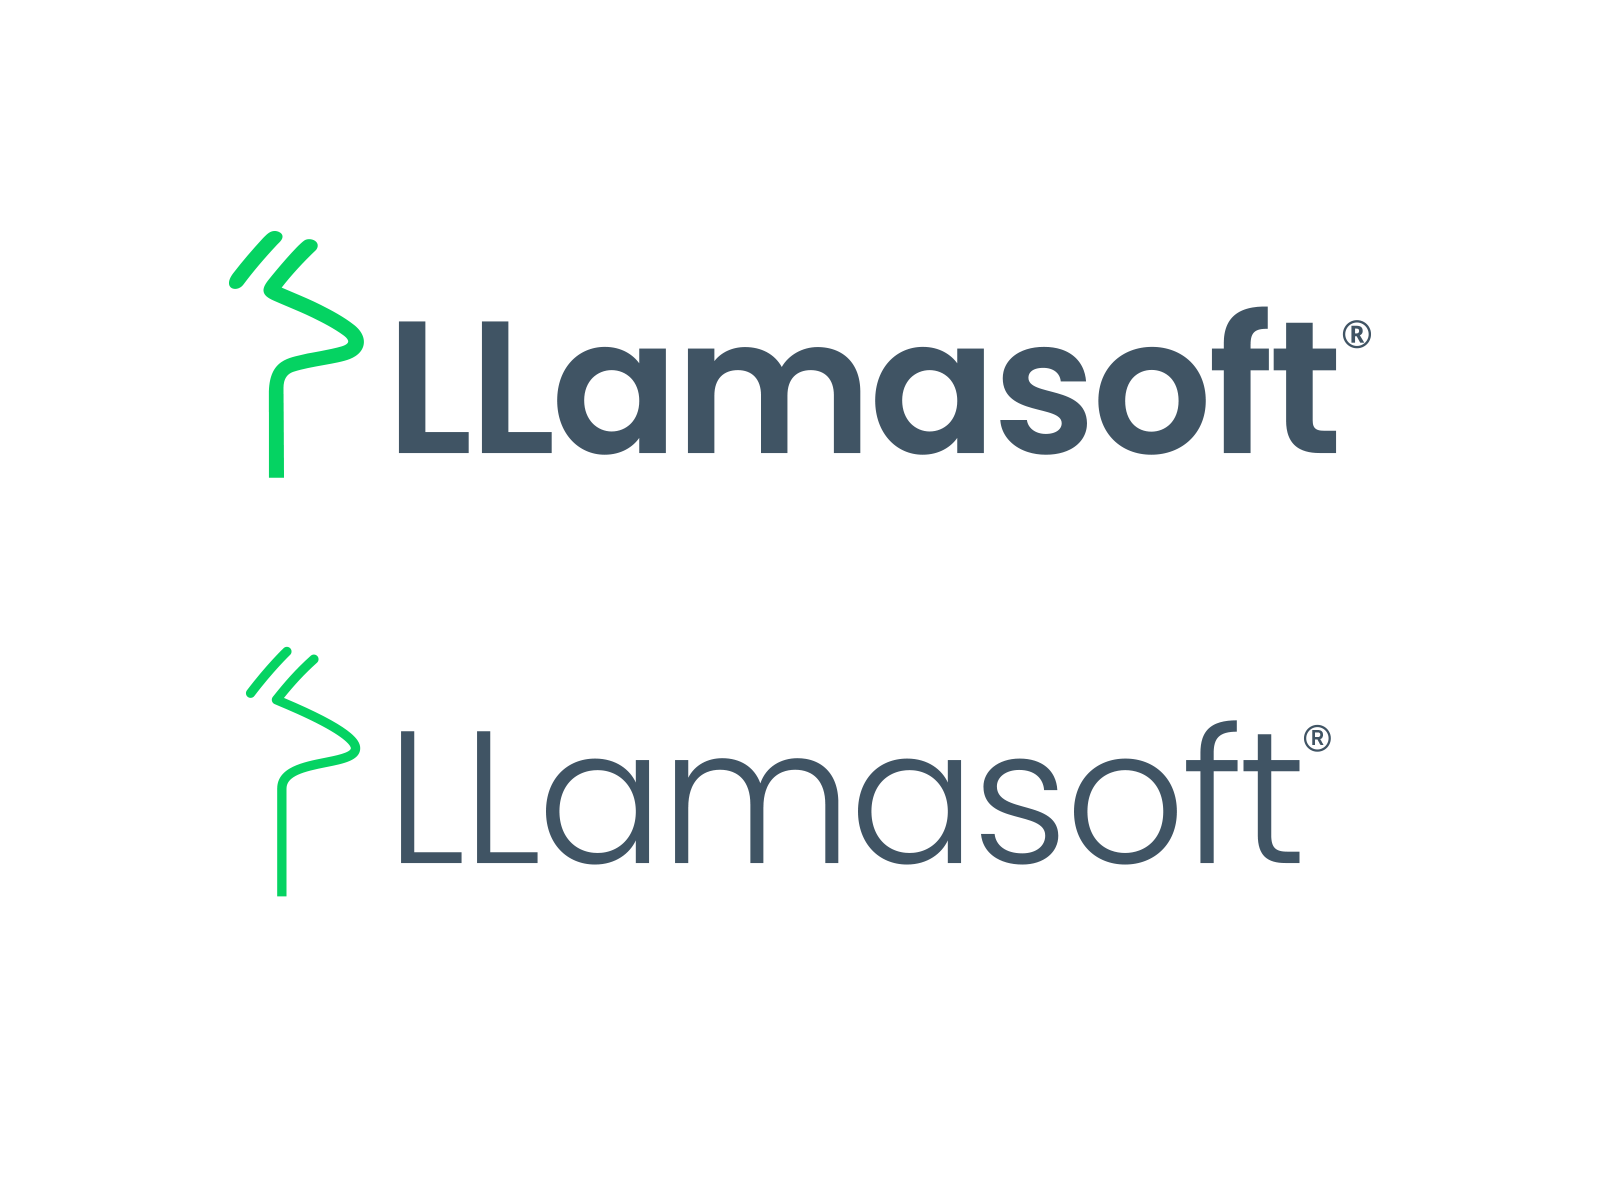 LLamasoft new logo design study by Matthew J Smith on Dribbble